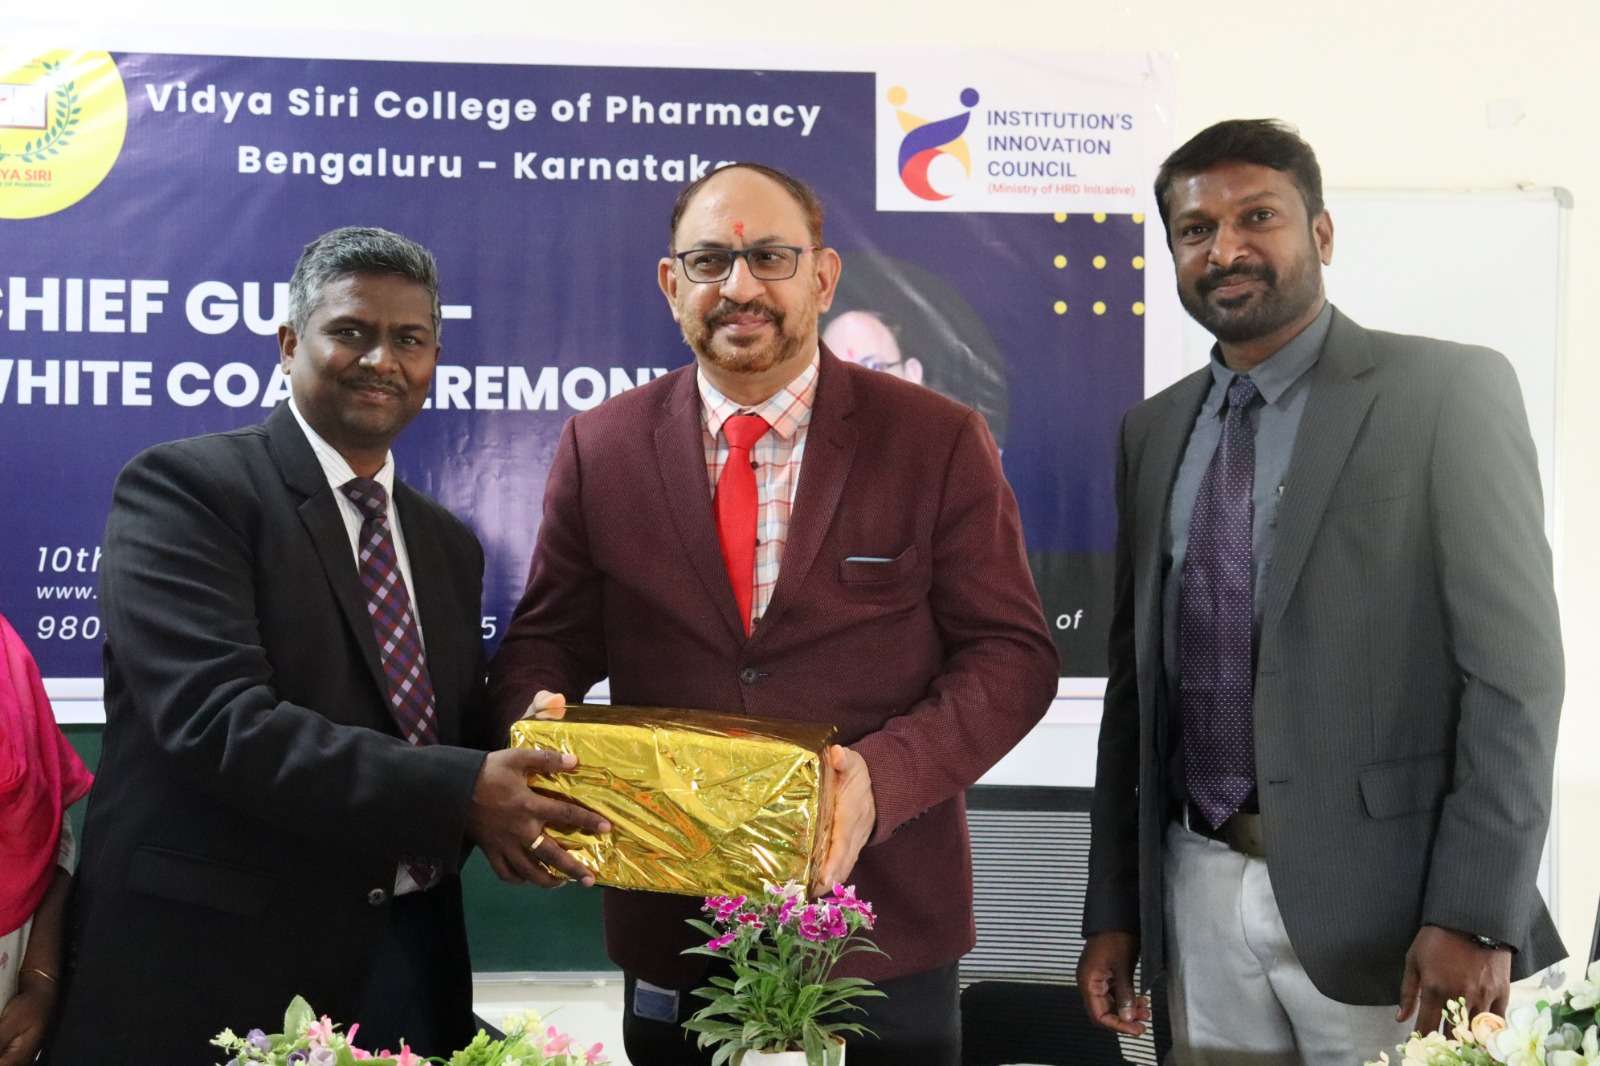 Dr. Raman Dang's Inspiring Address at Vidya Siri College of Pharmacy